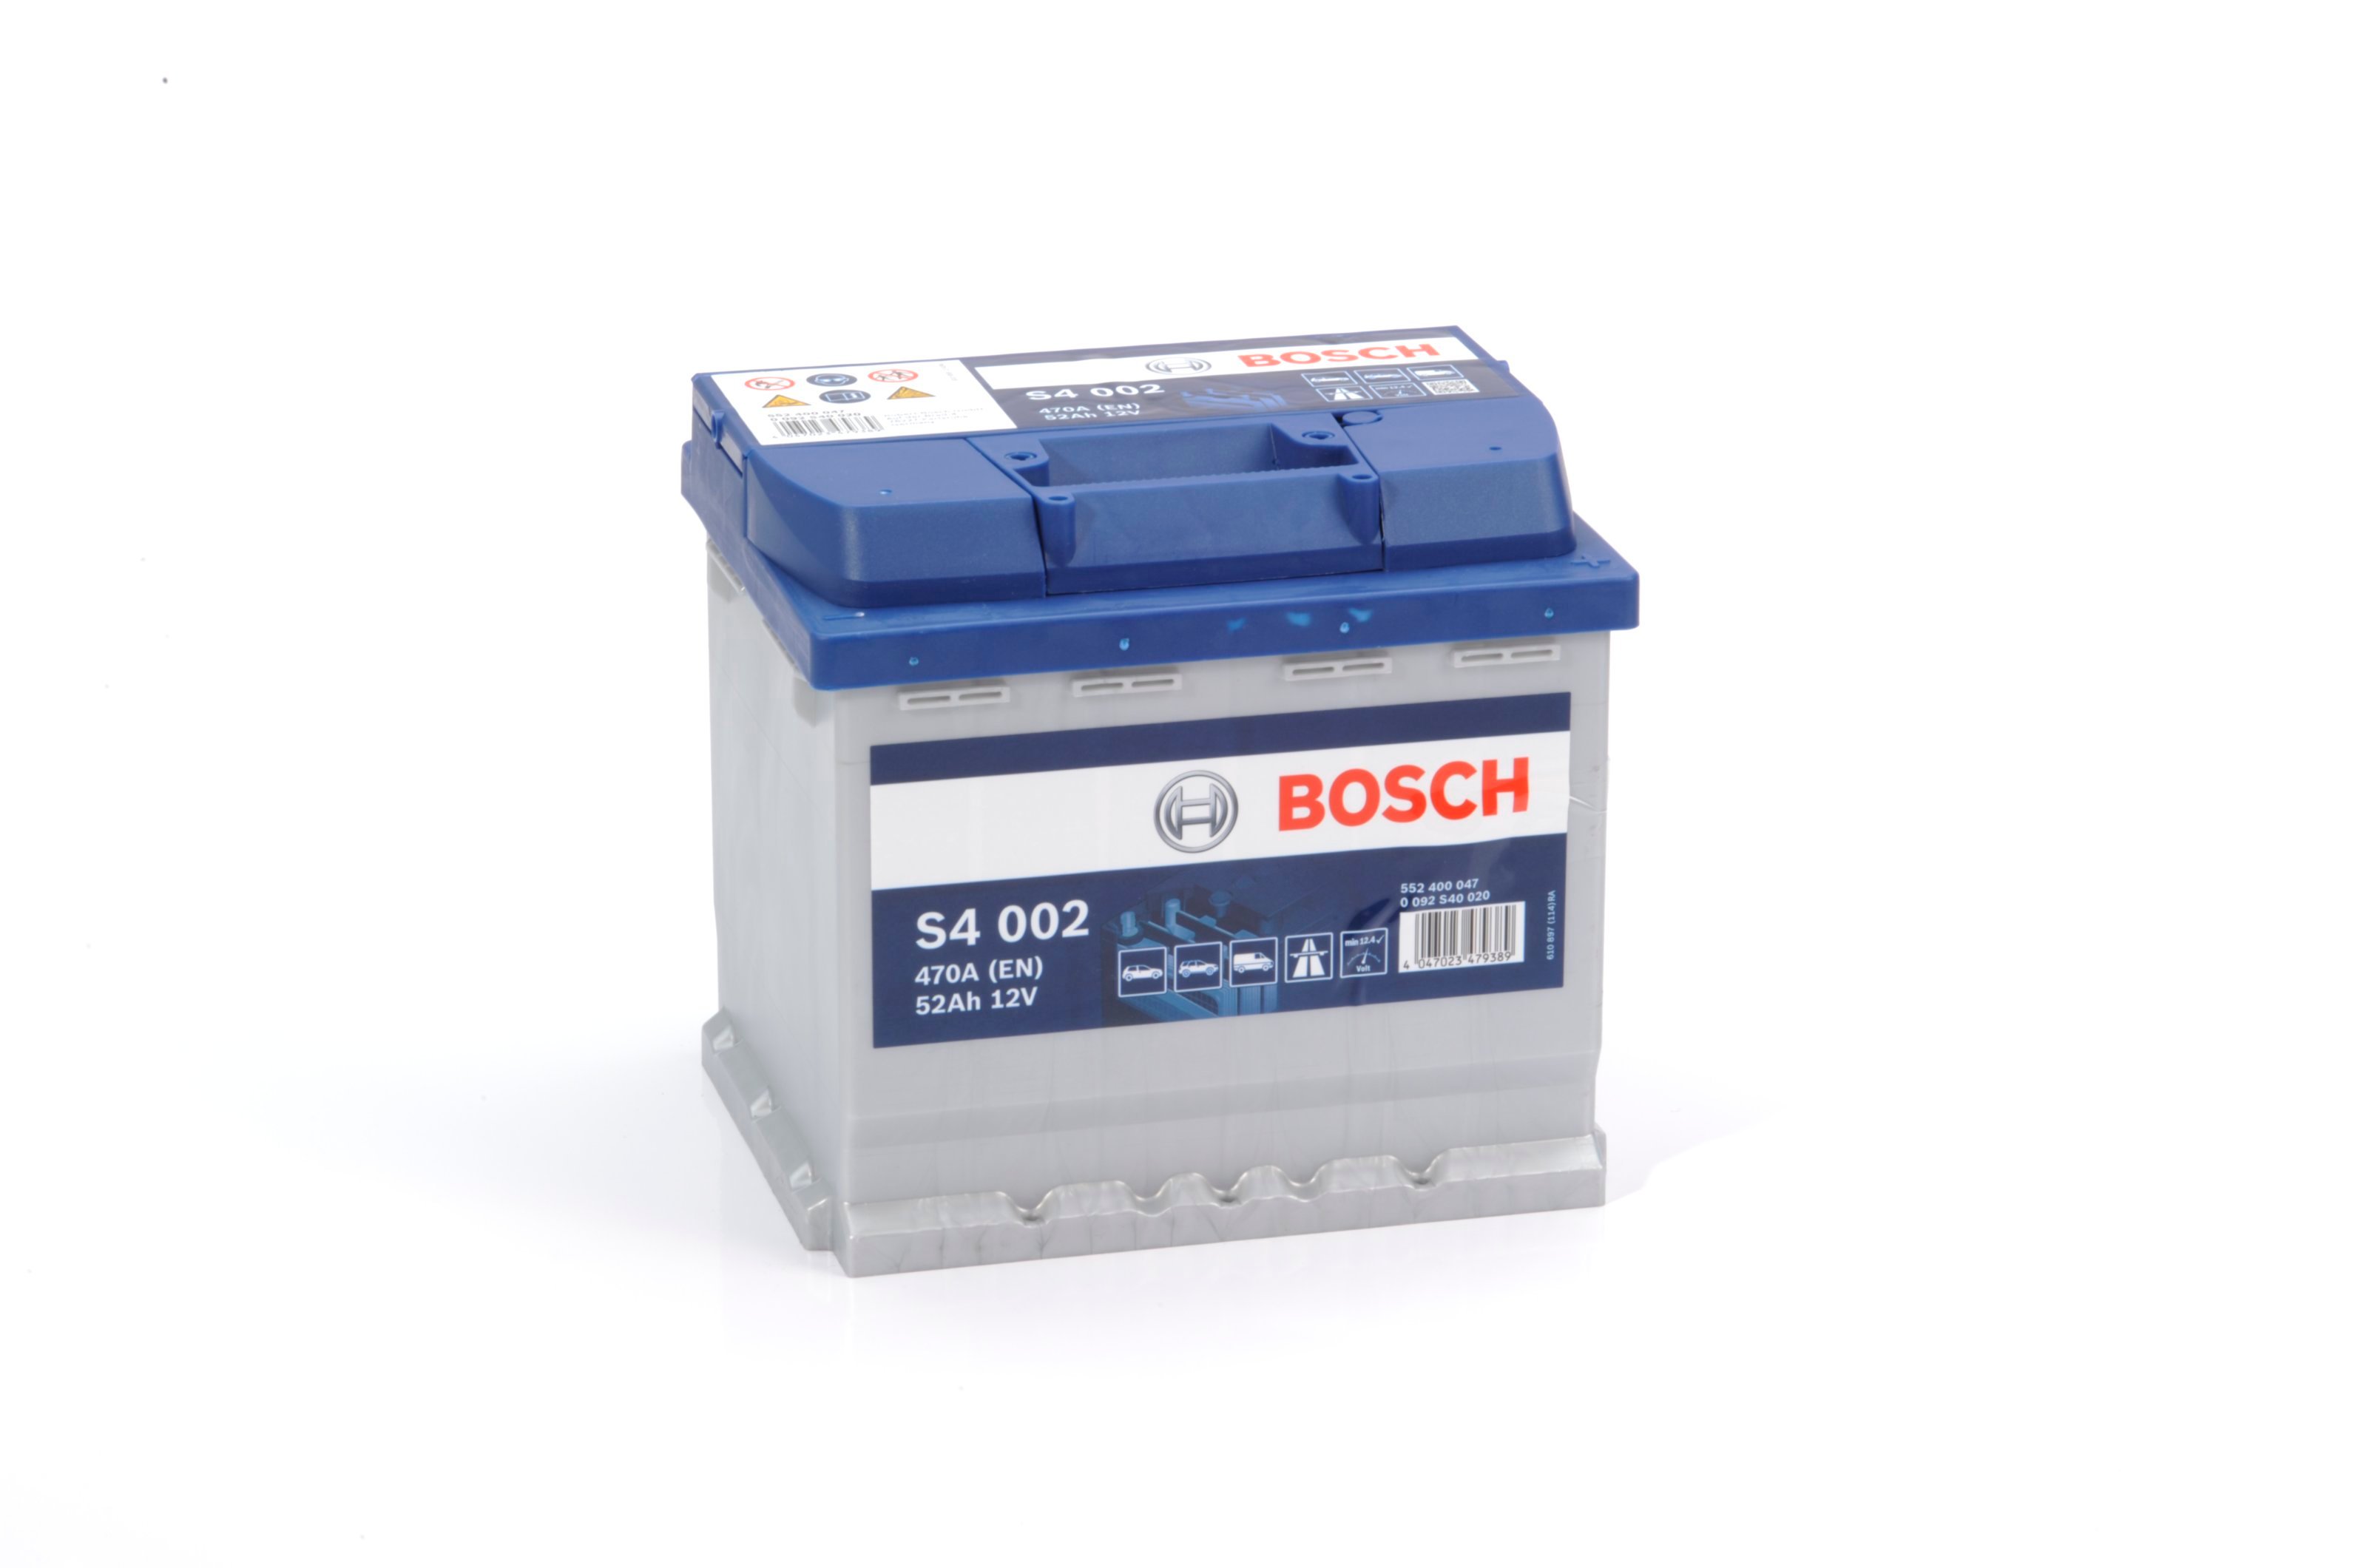 Батарея аккумуляторная Bosch 12В 52Ач 470A(EN) R+ Bosch 0092S40020 - фото 2